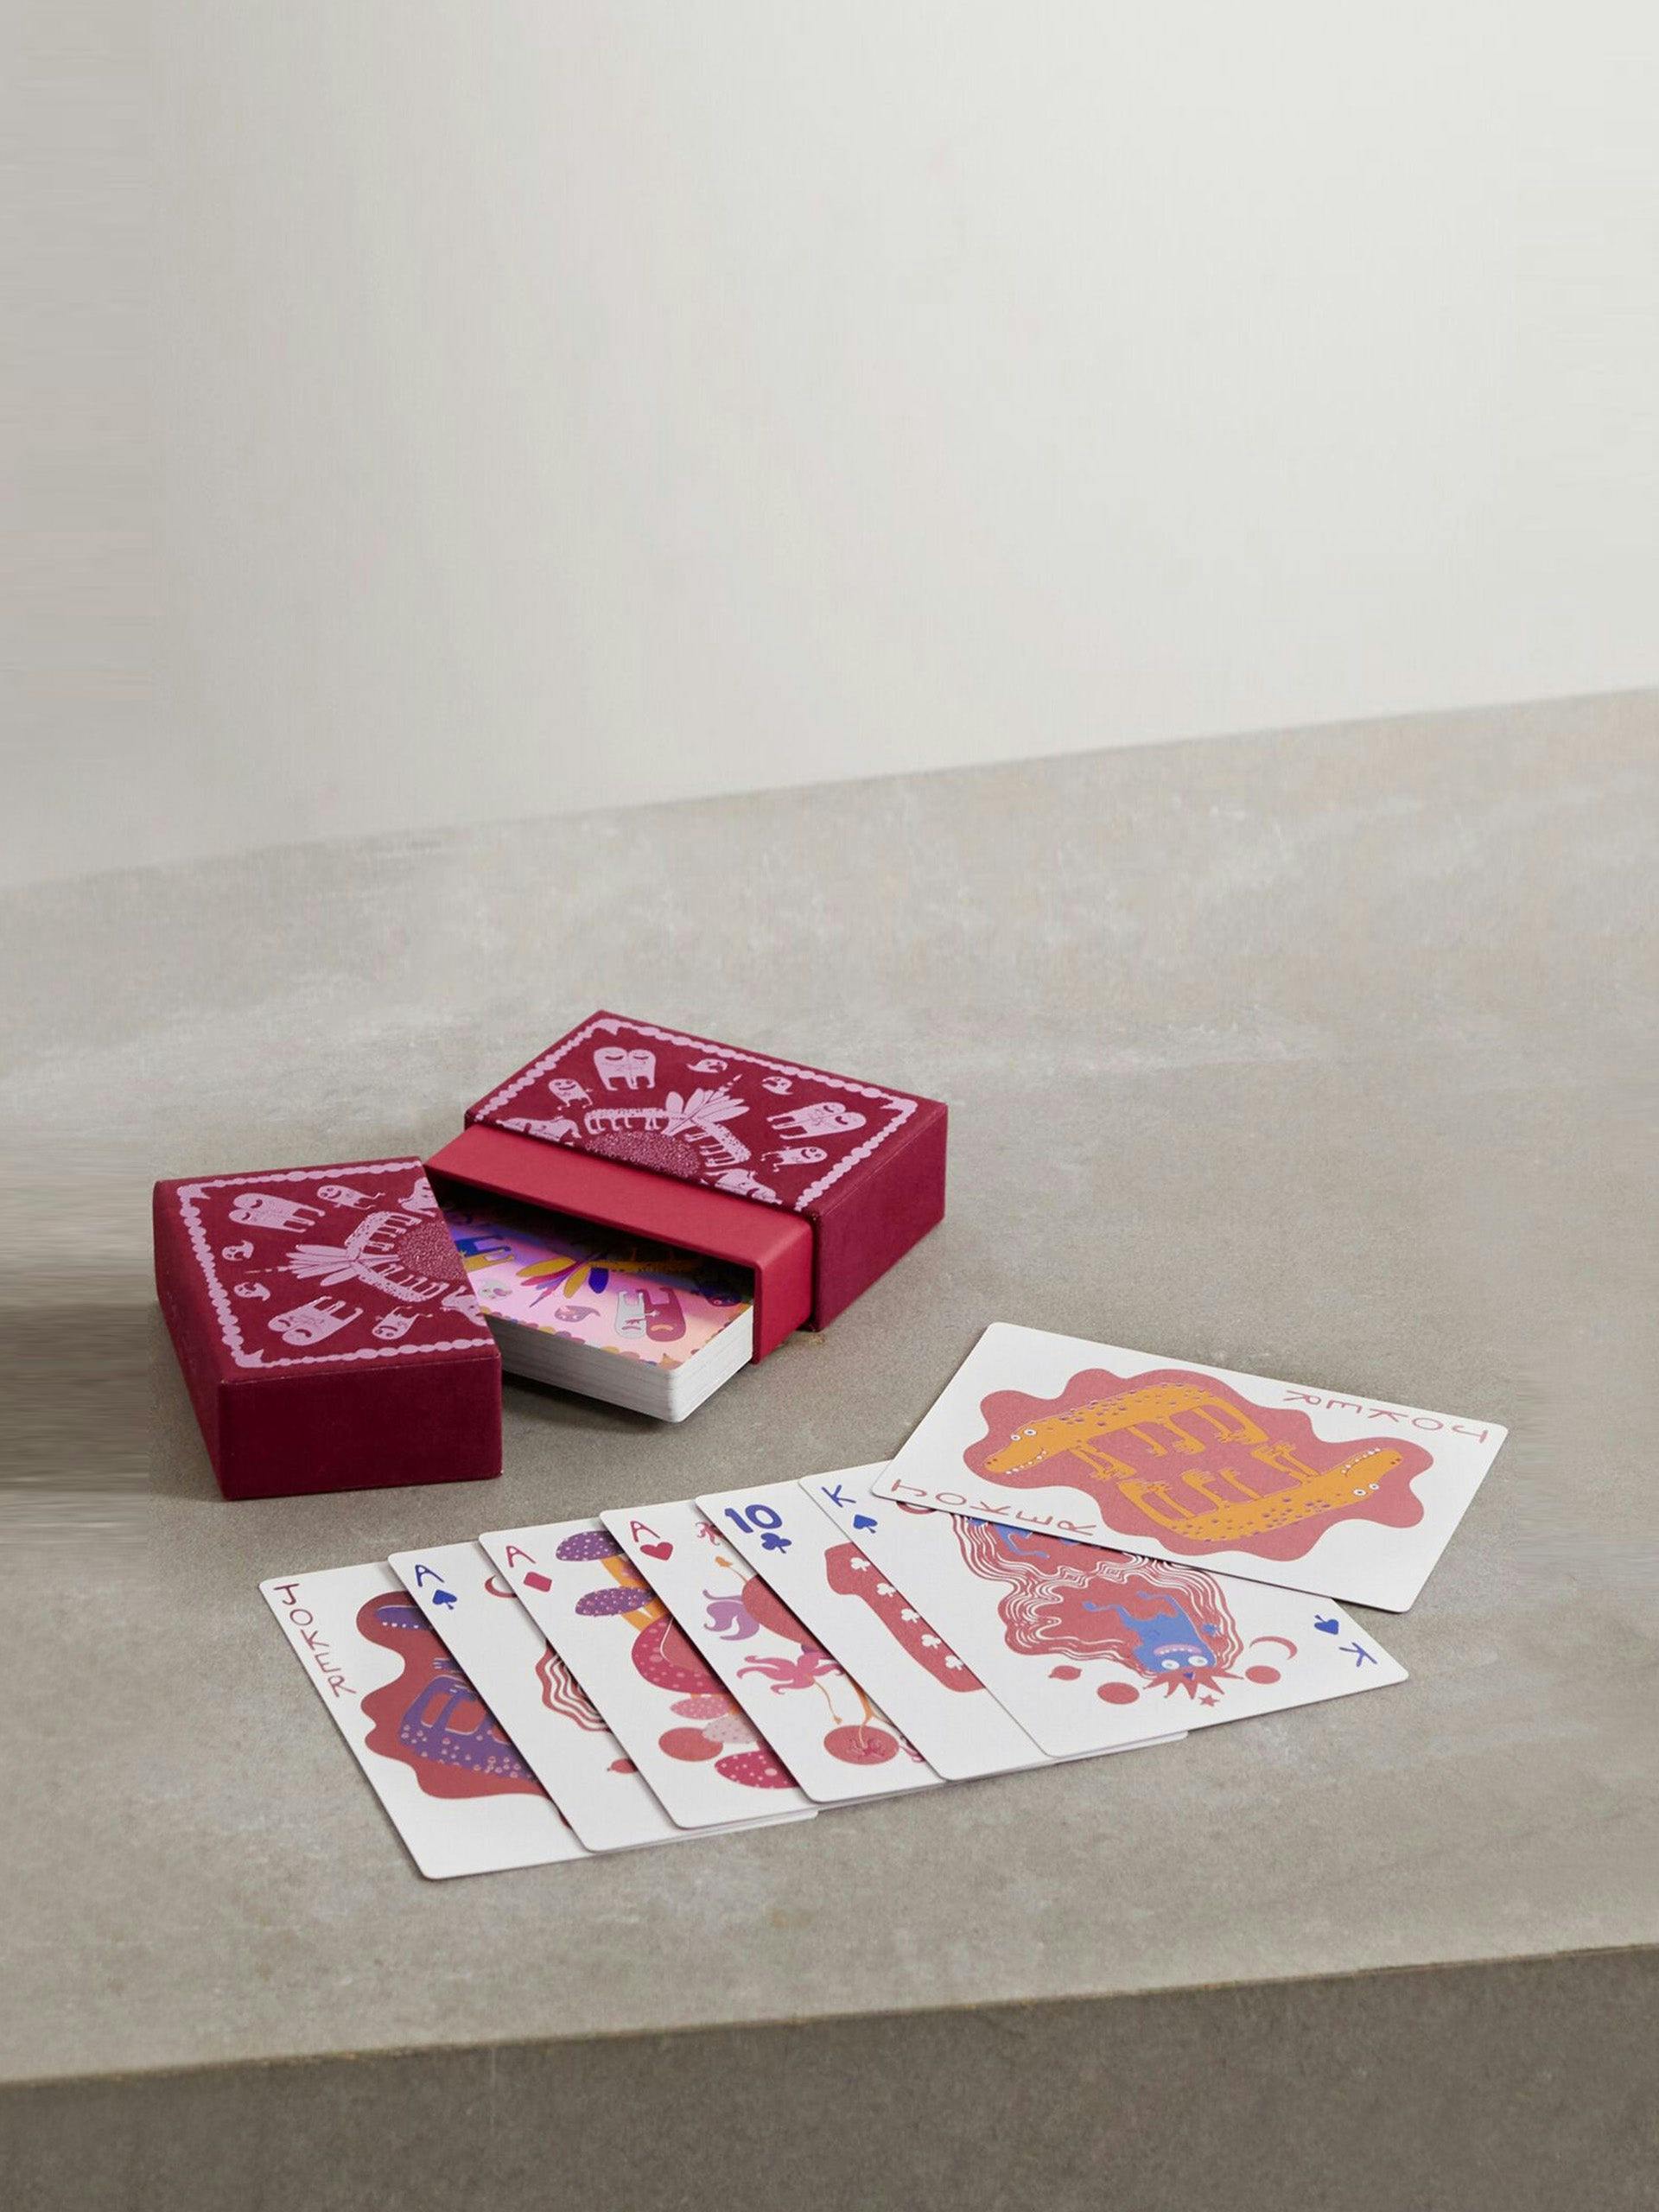 Velvet box and jumbo playing cards